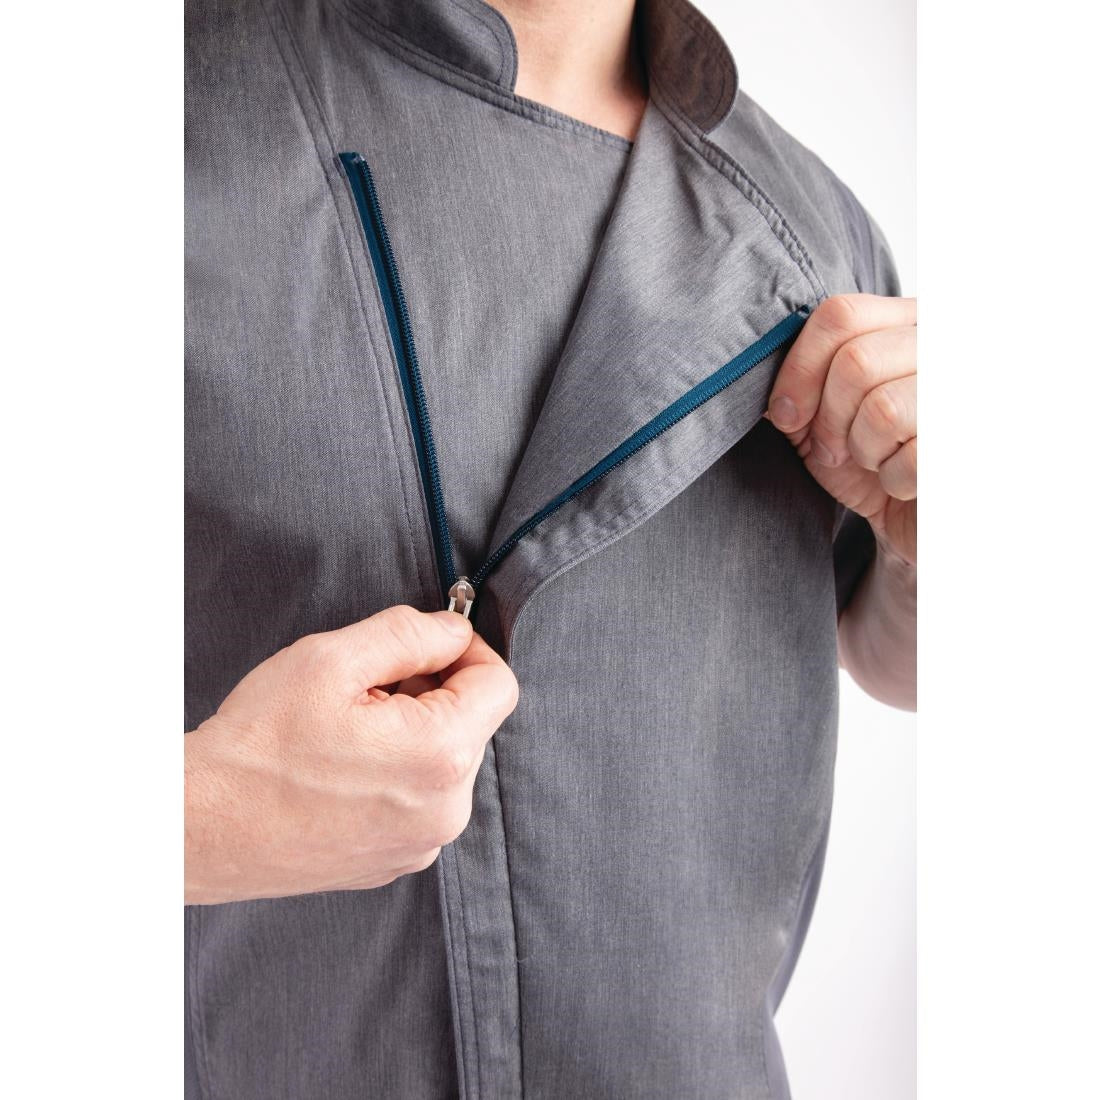 BB267-M Chef Works Unisex Springfield Lightweight Short Sleeve Zipper Coat Ink Blue Size M